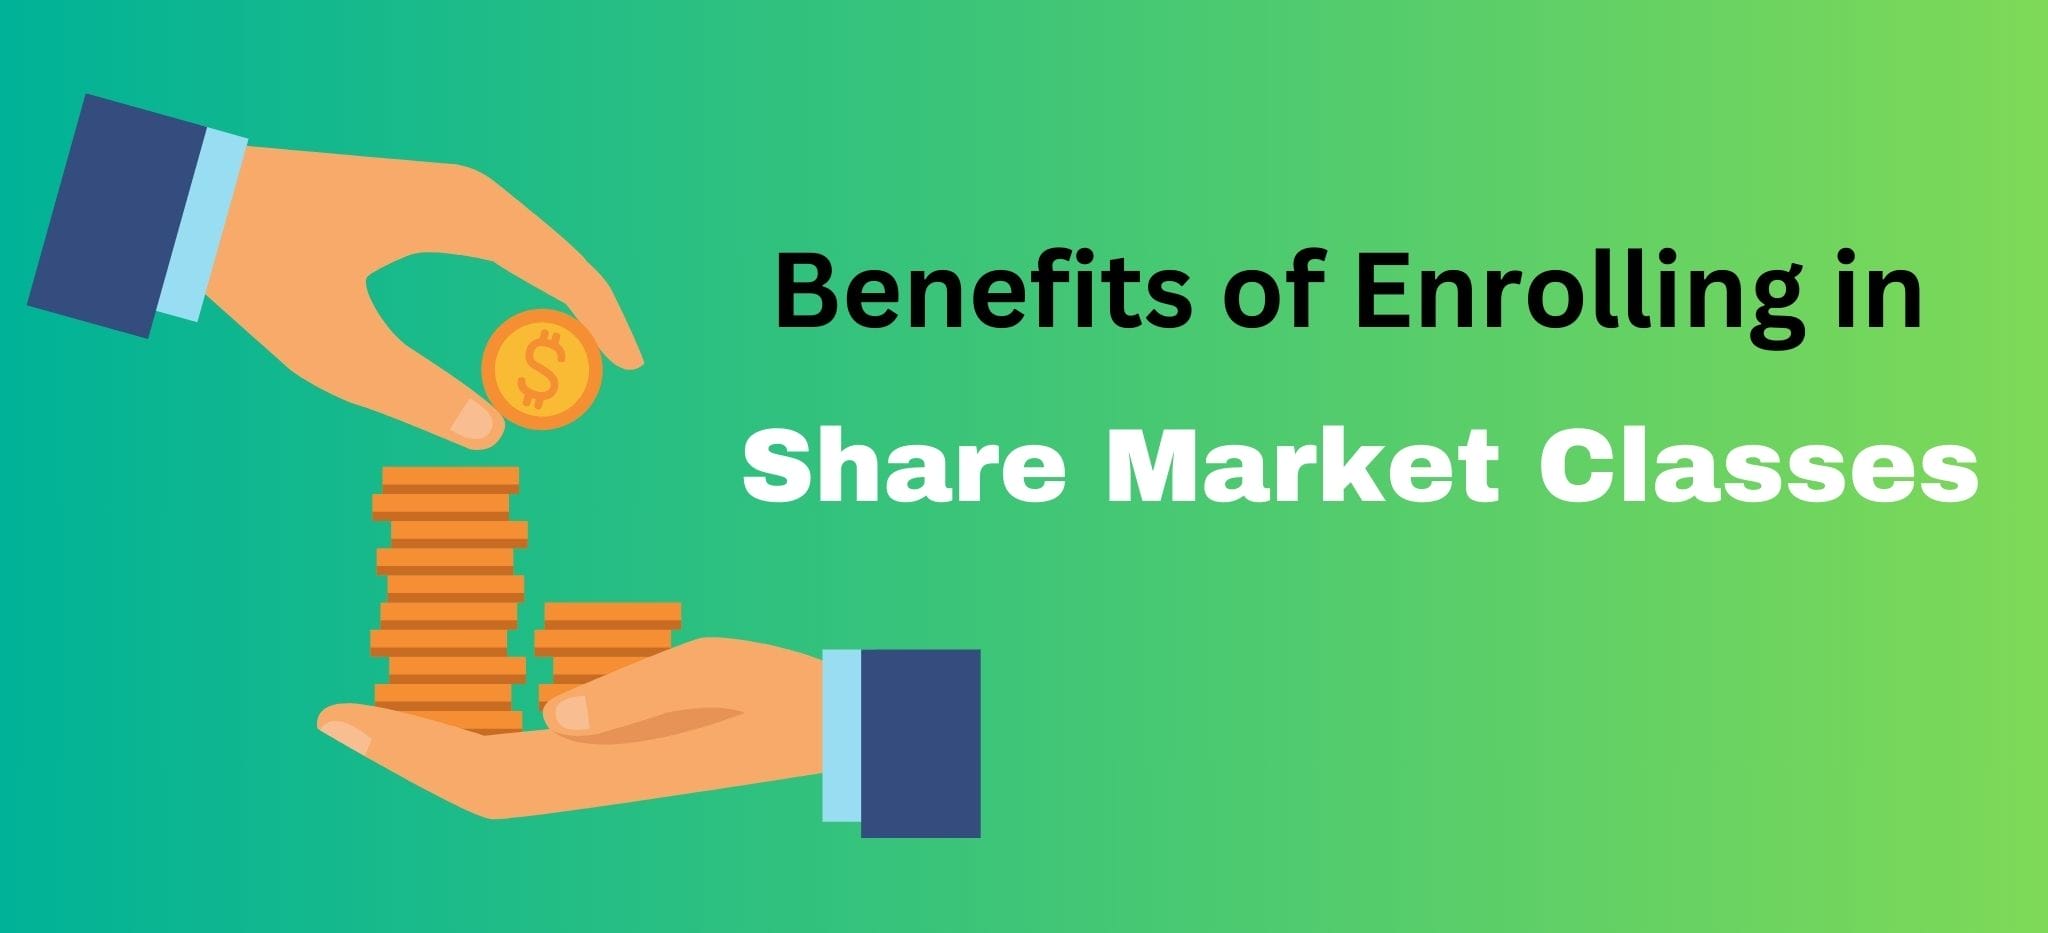 Share Market Training